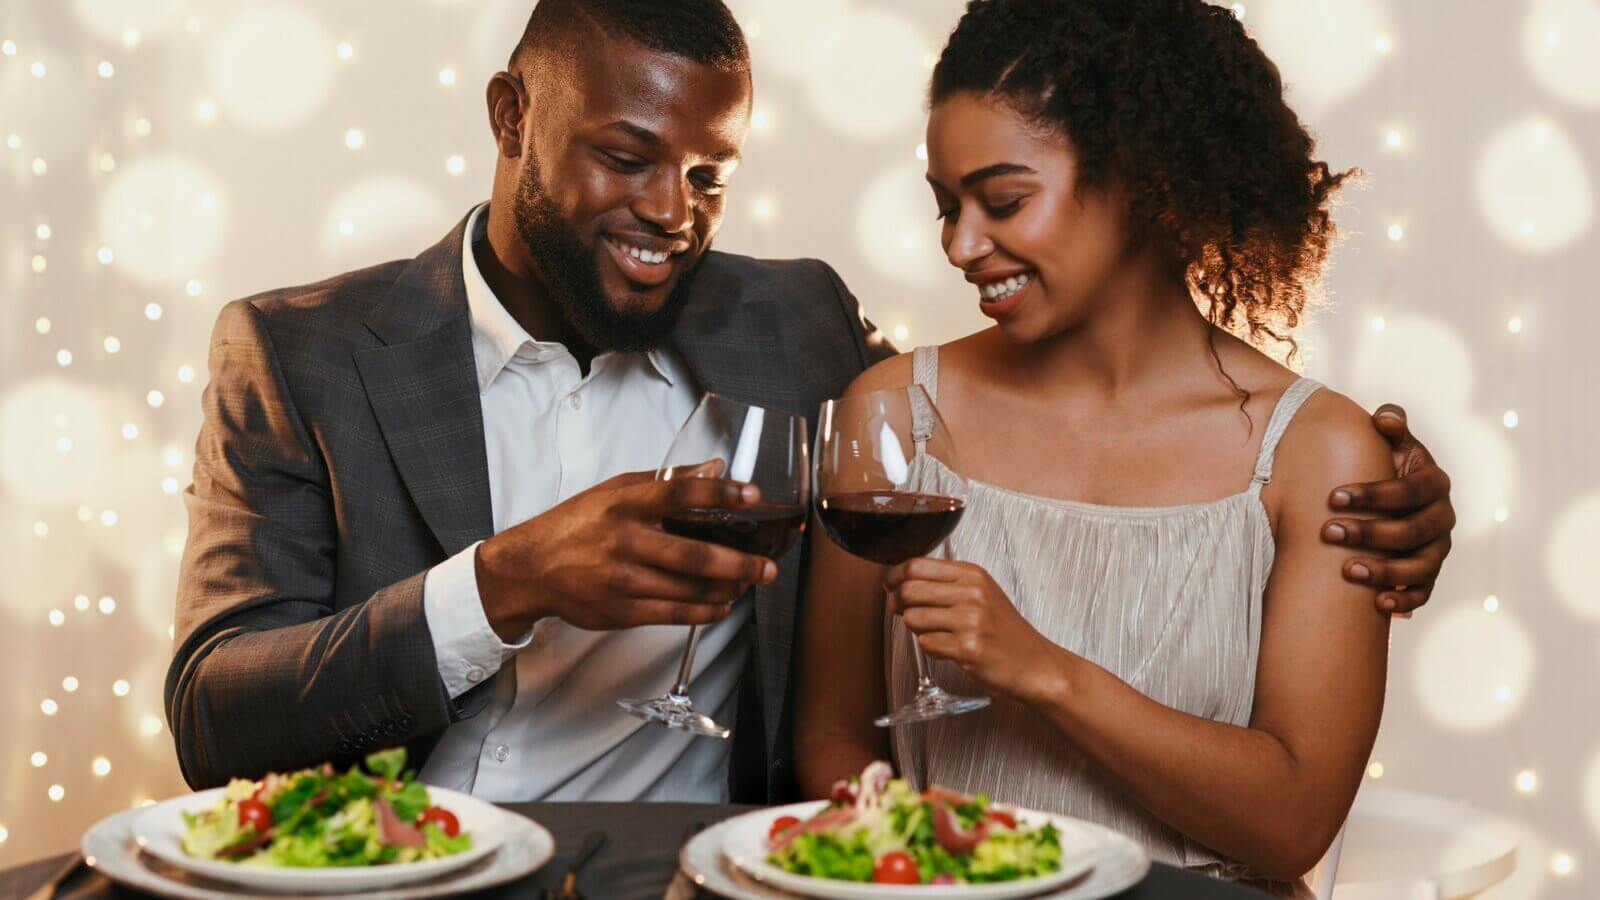 Married black couple celebrating anniversary in fancy restaurant